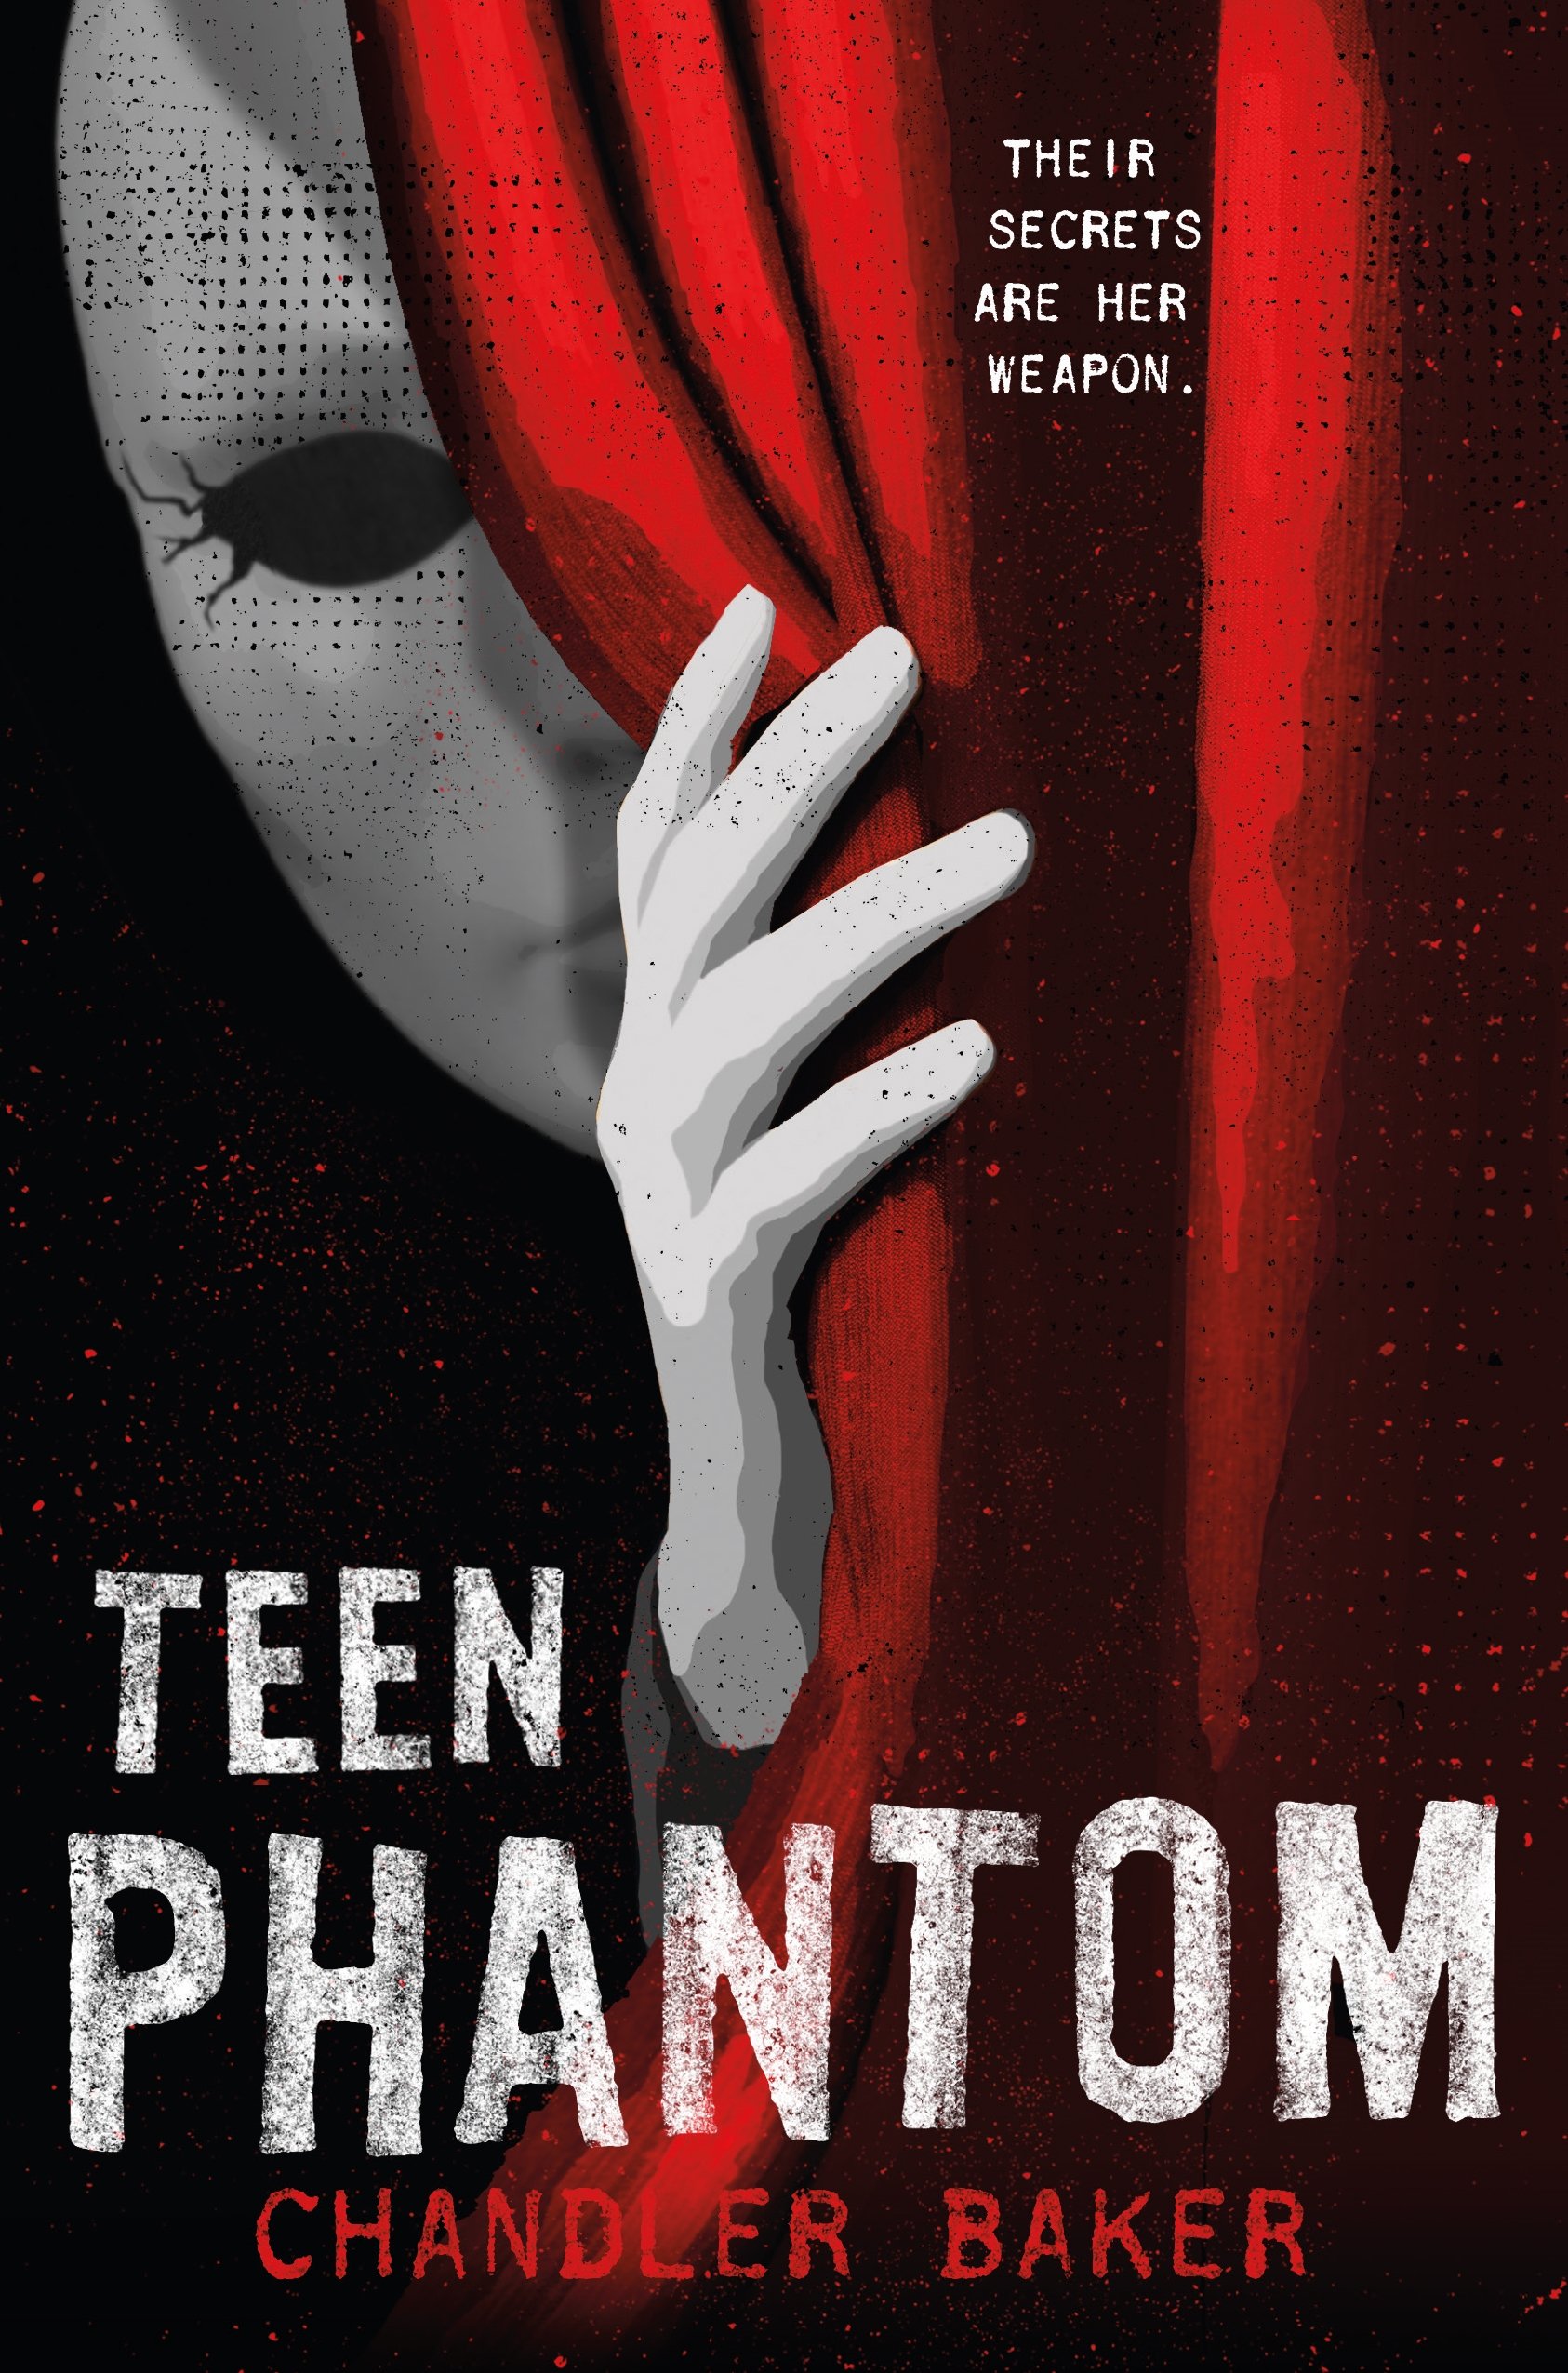 Teen Phantom